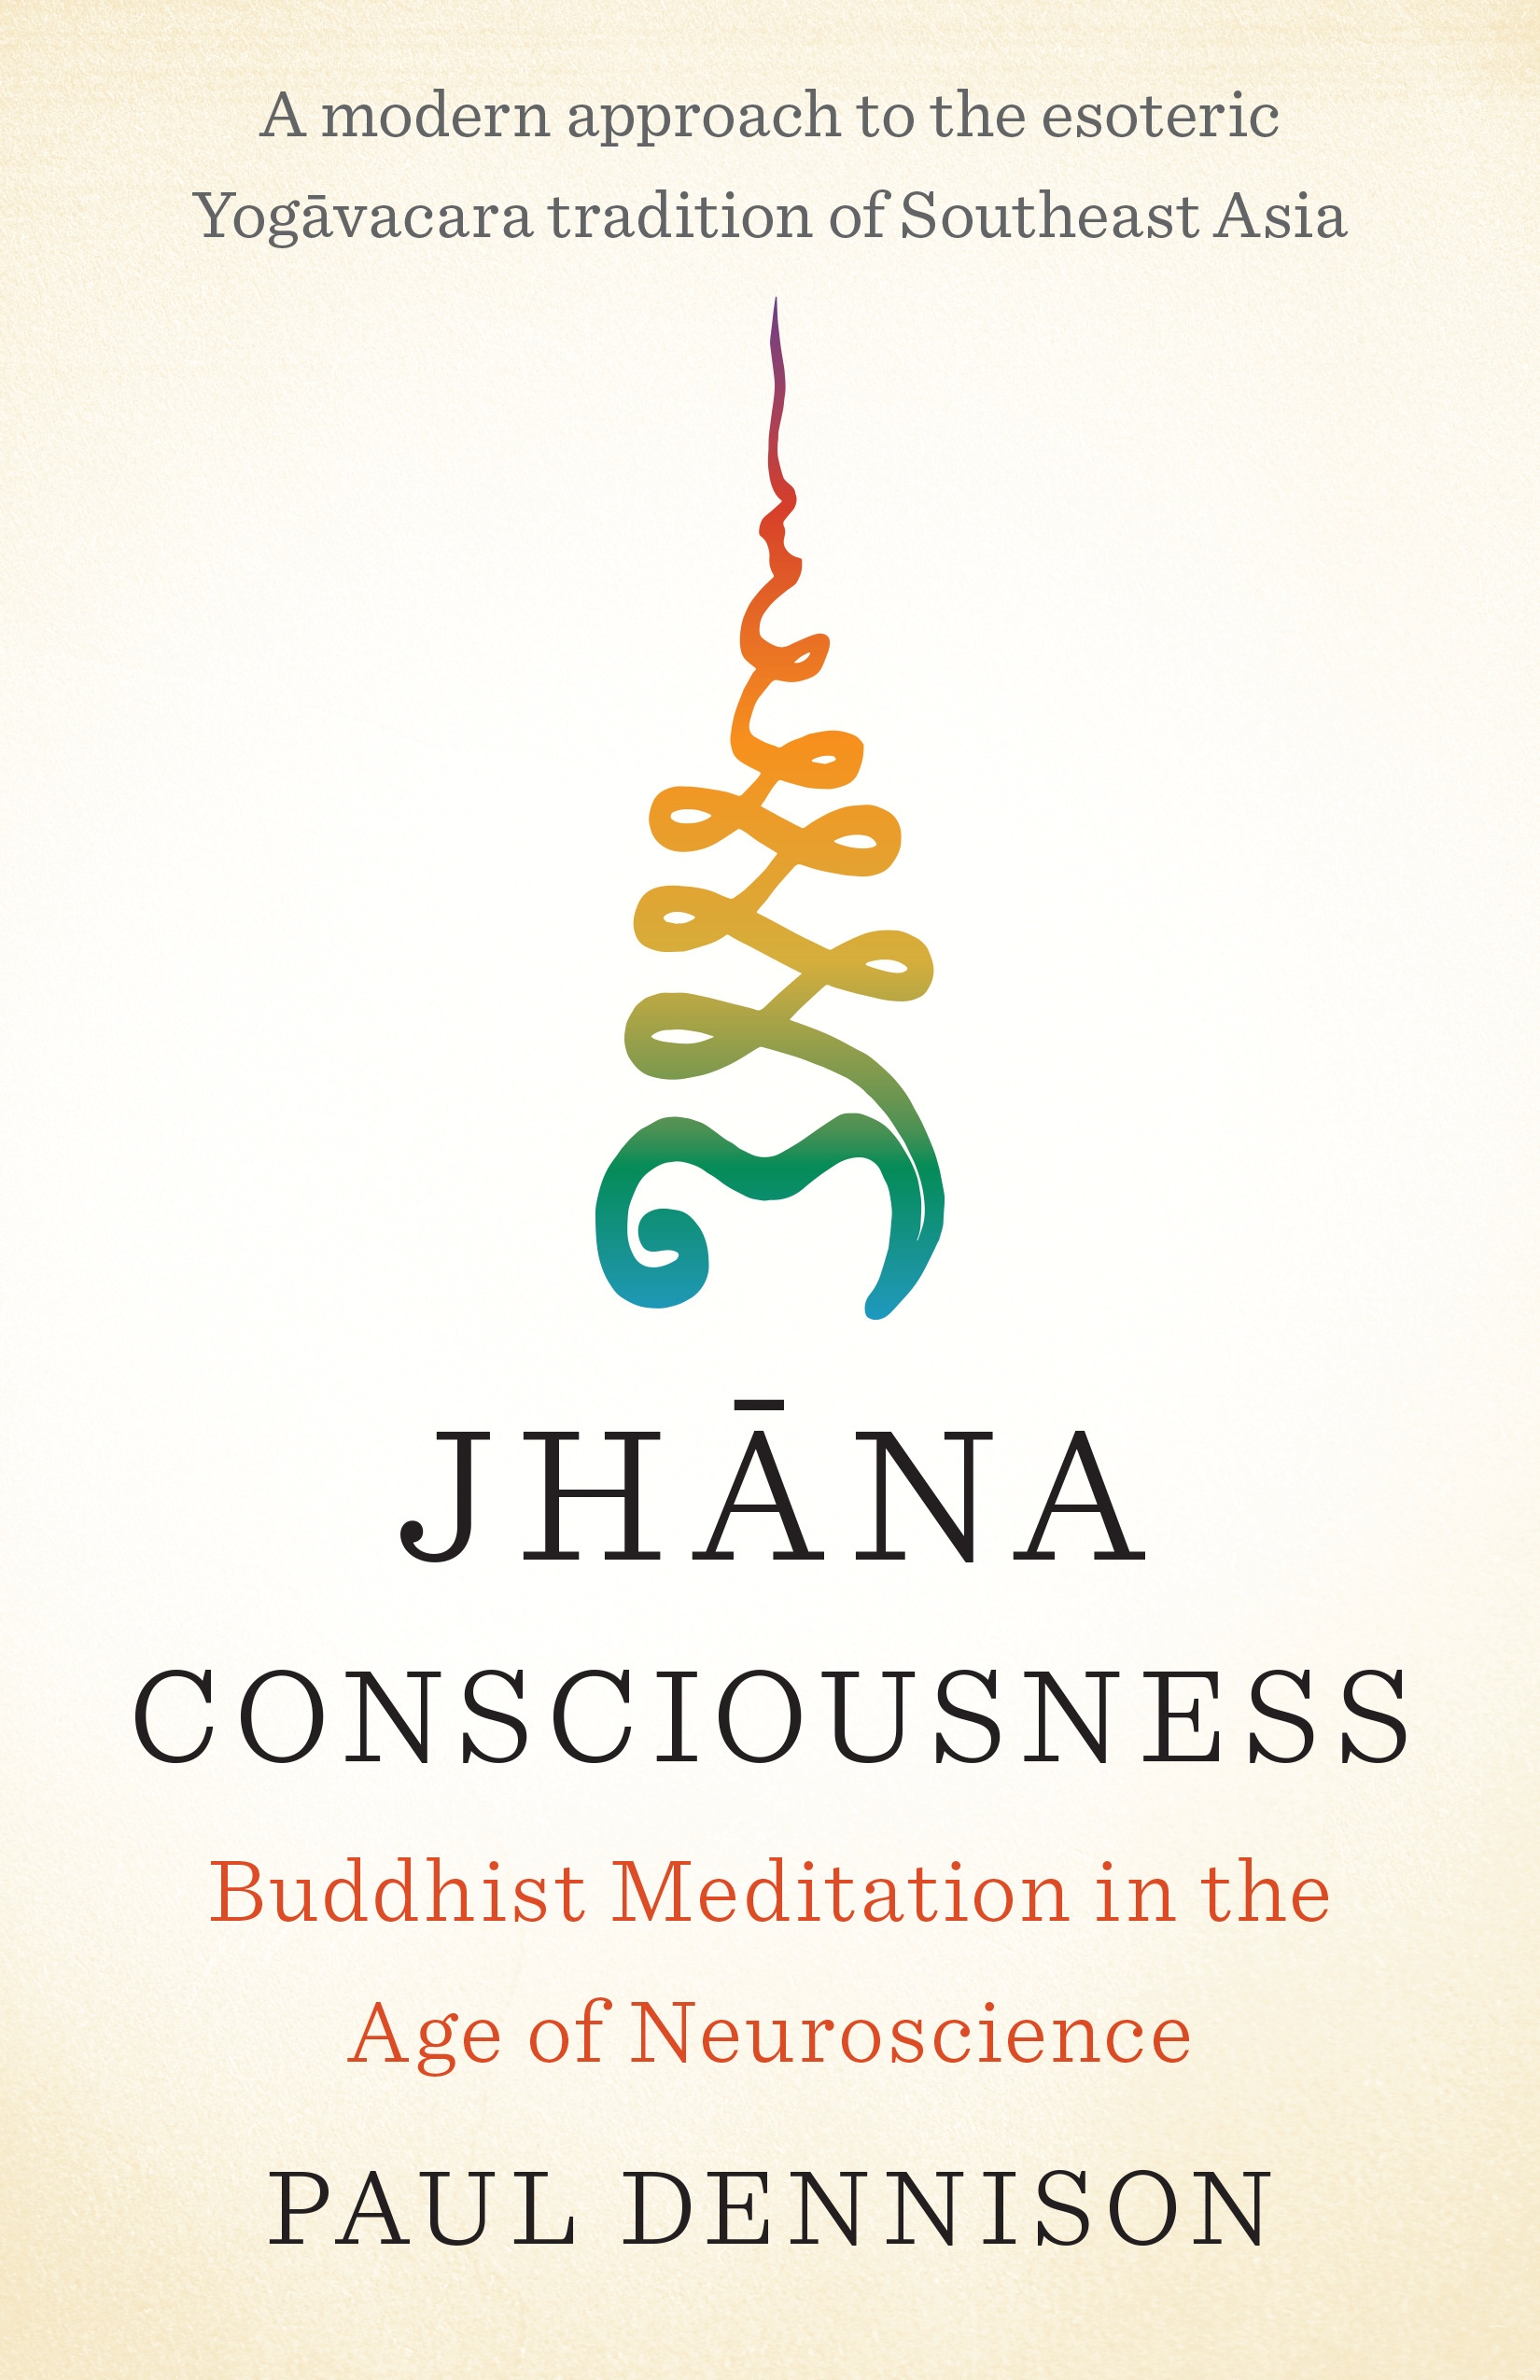 Jhana Consciousness by Paul Dennison - Penguin Books Australia